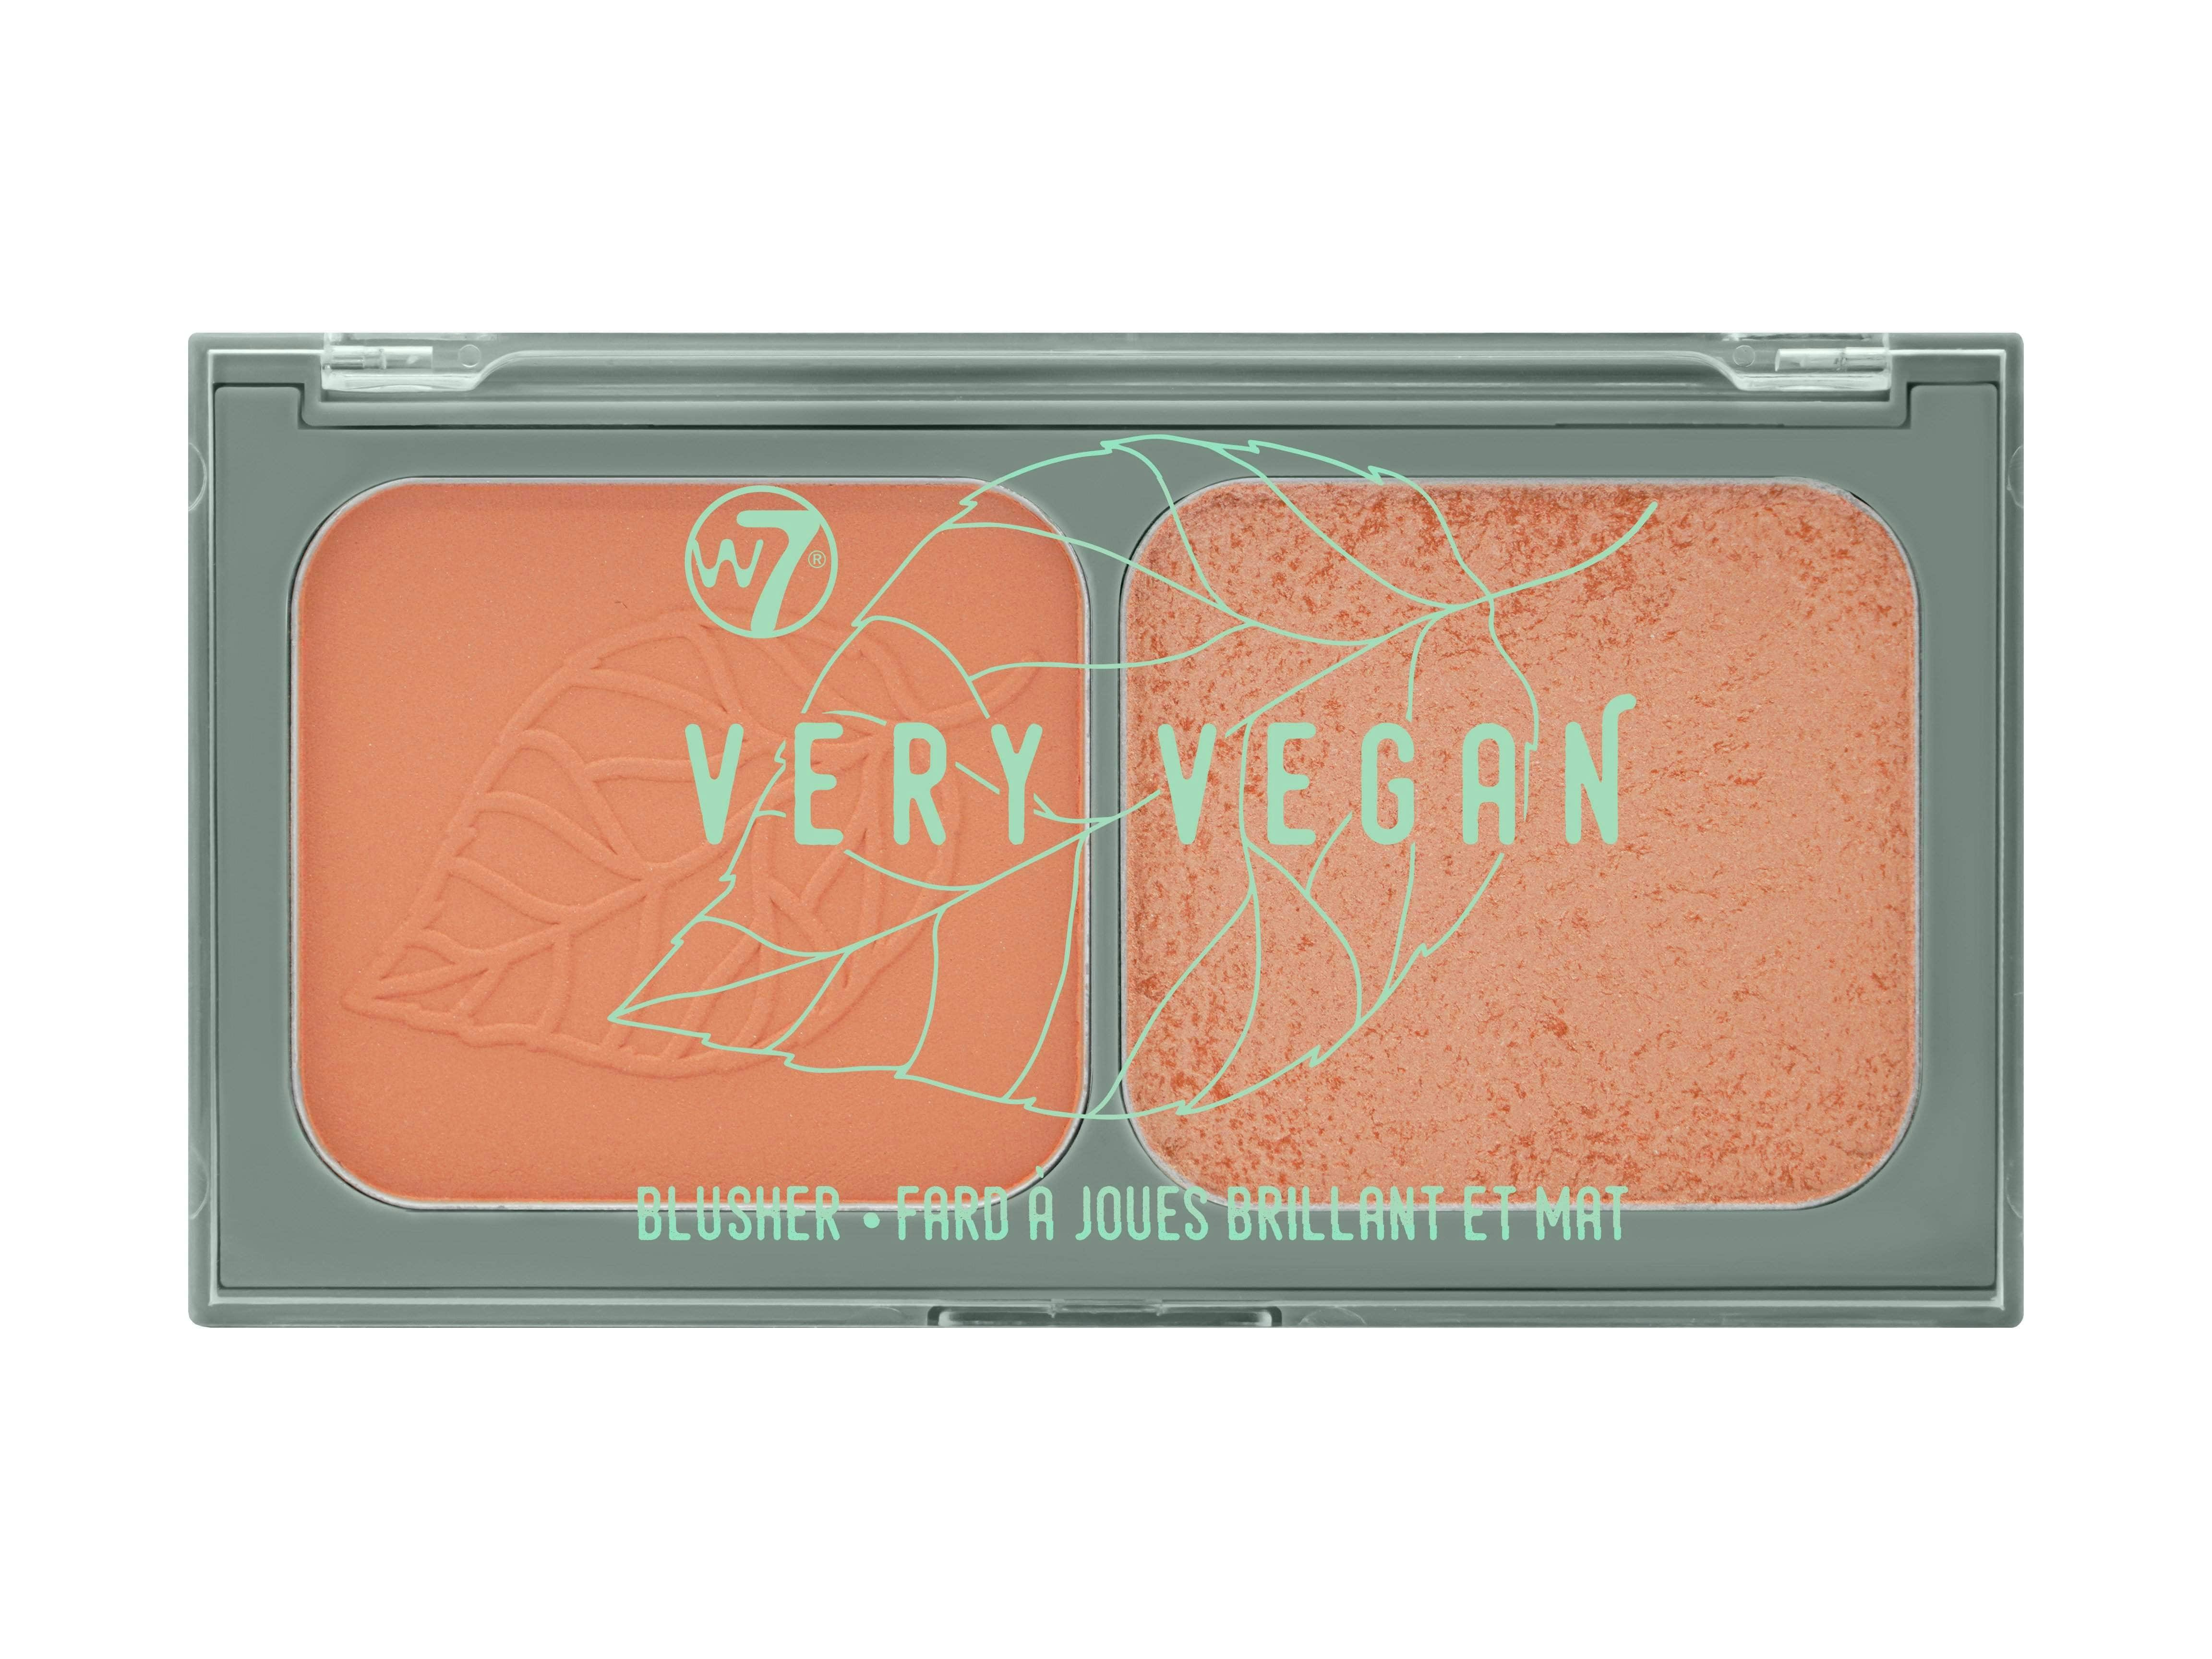 W7 Very Vegan Blusher Duo Sweet Pea 16 g